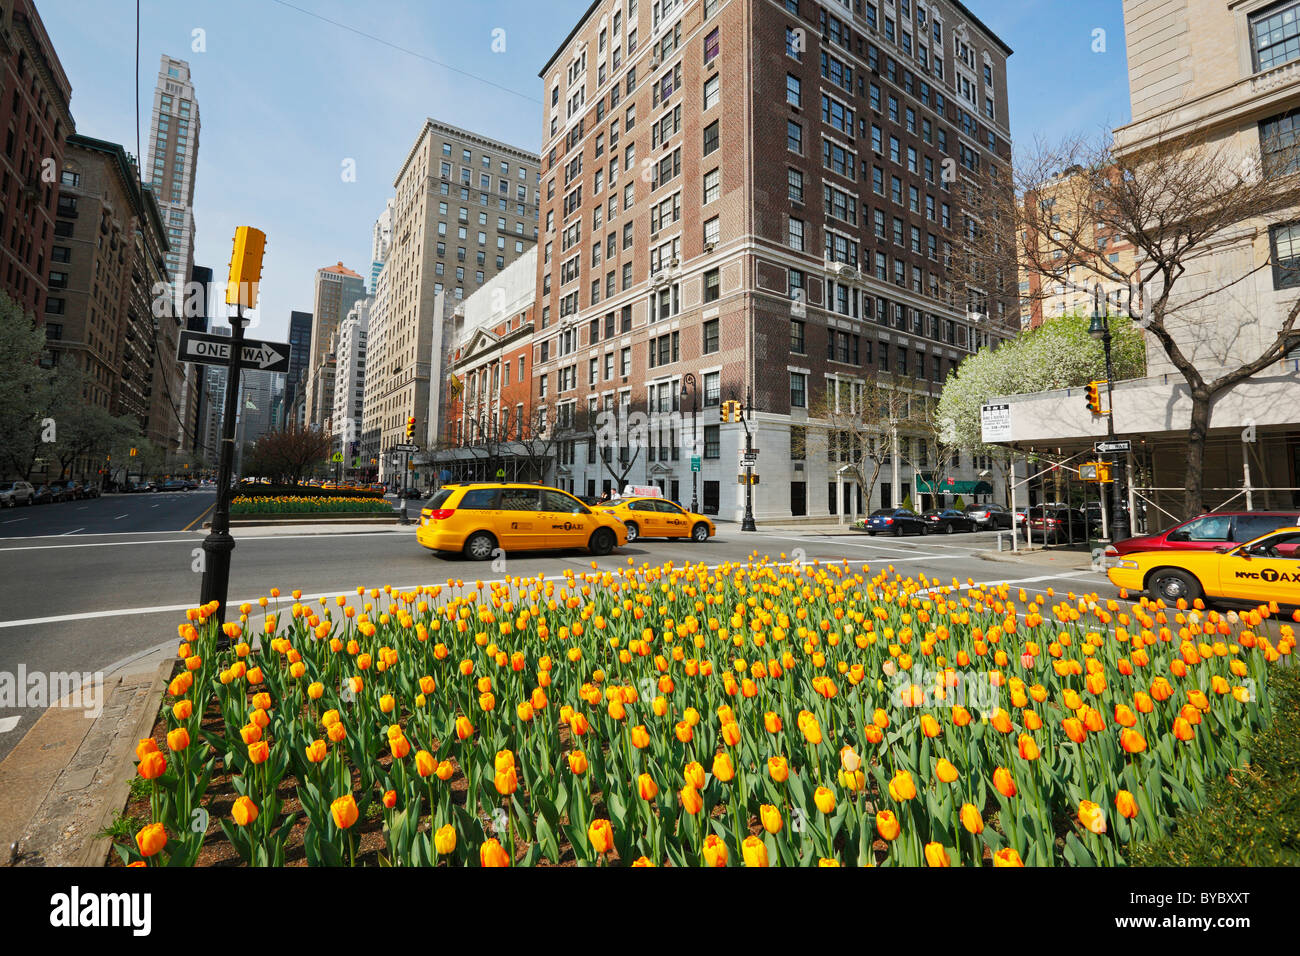 Tulips in Park Avenue, New York Stock Photo - Alamy